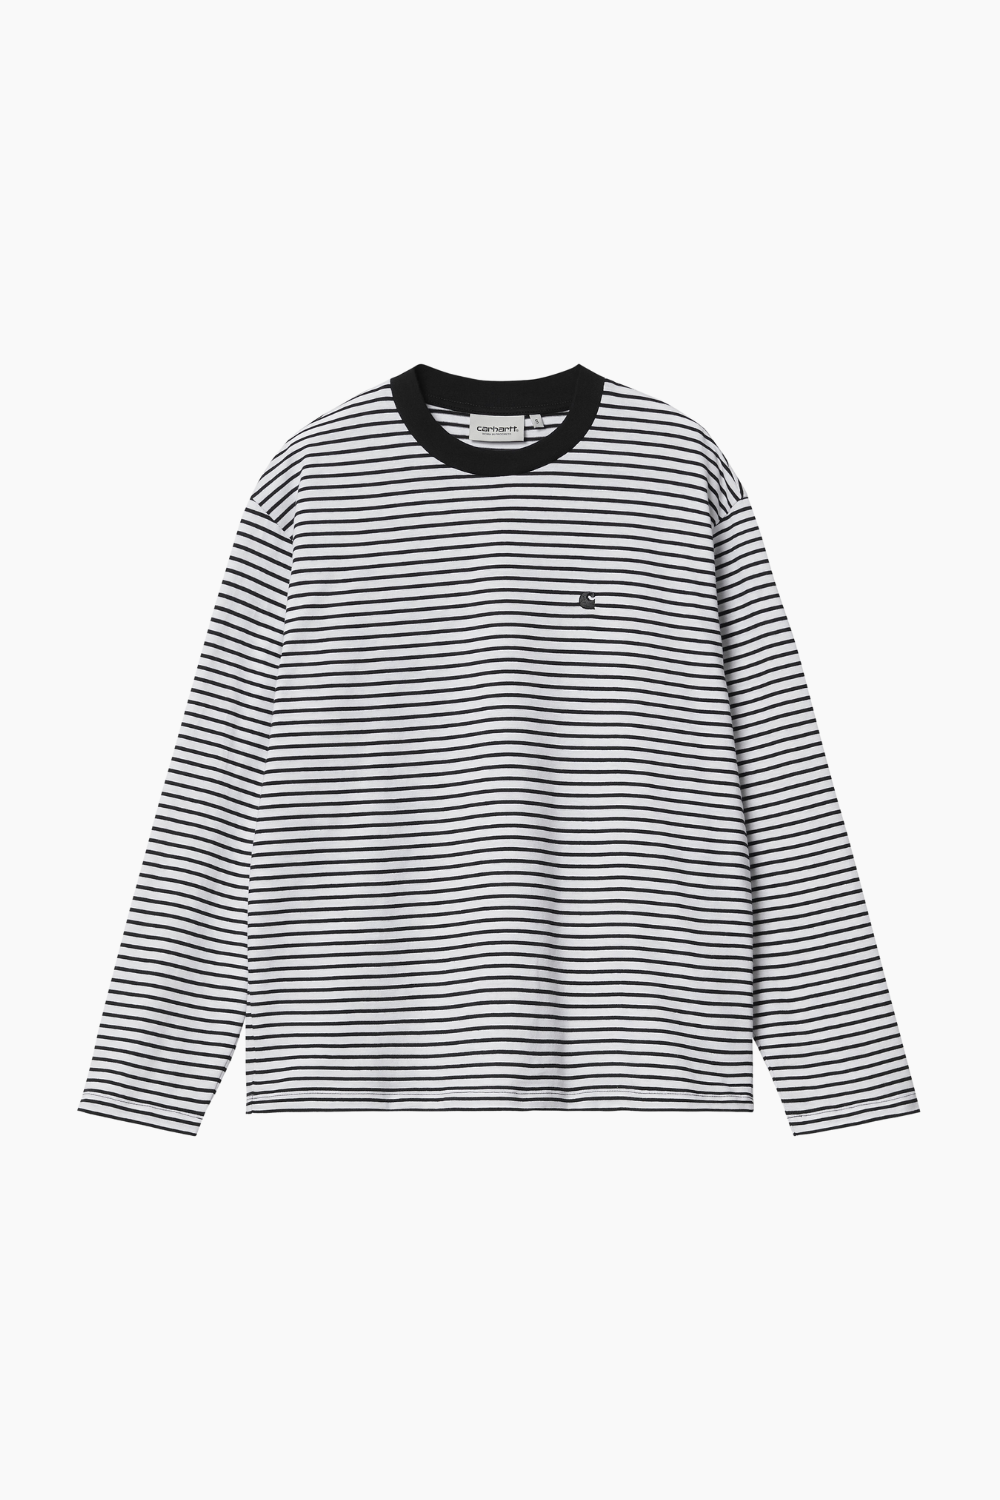 W' L/S Coleen T-Shirt - Coleen Stripe, White/Black - Carhartt WIP - Stribet L